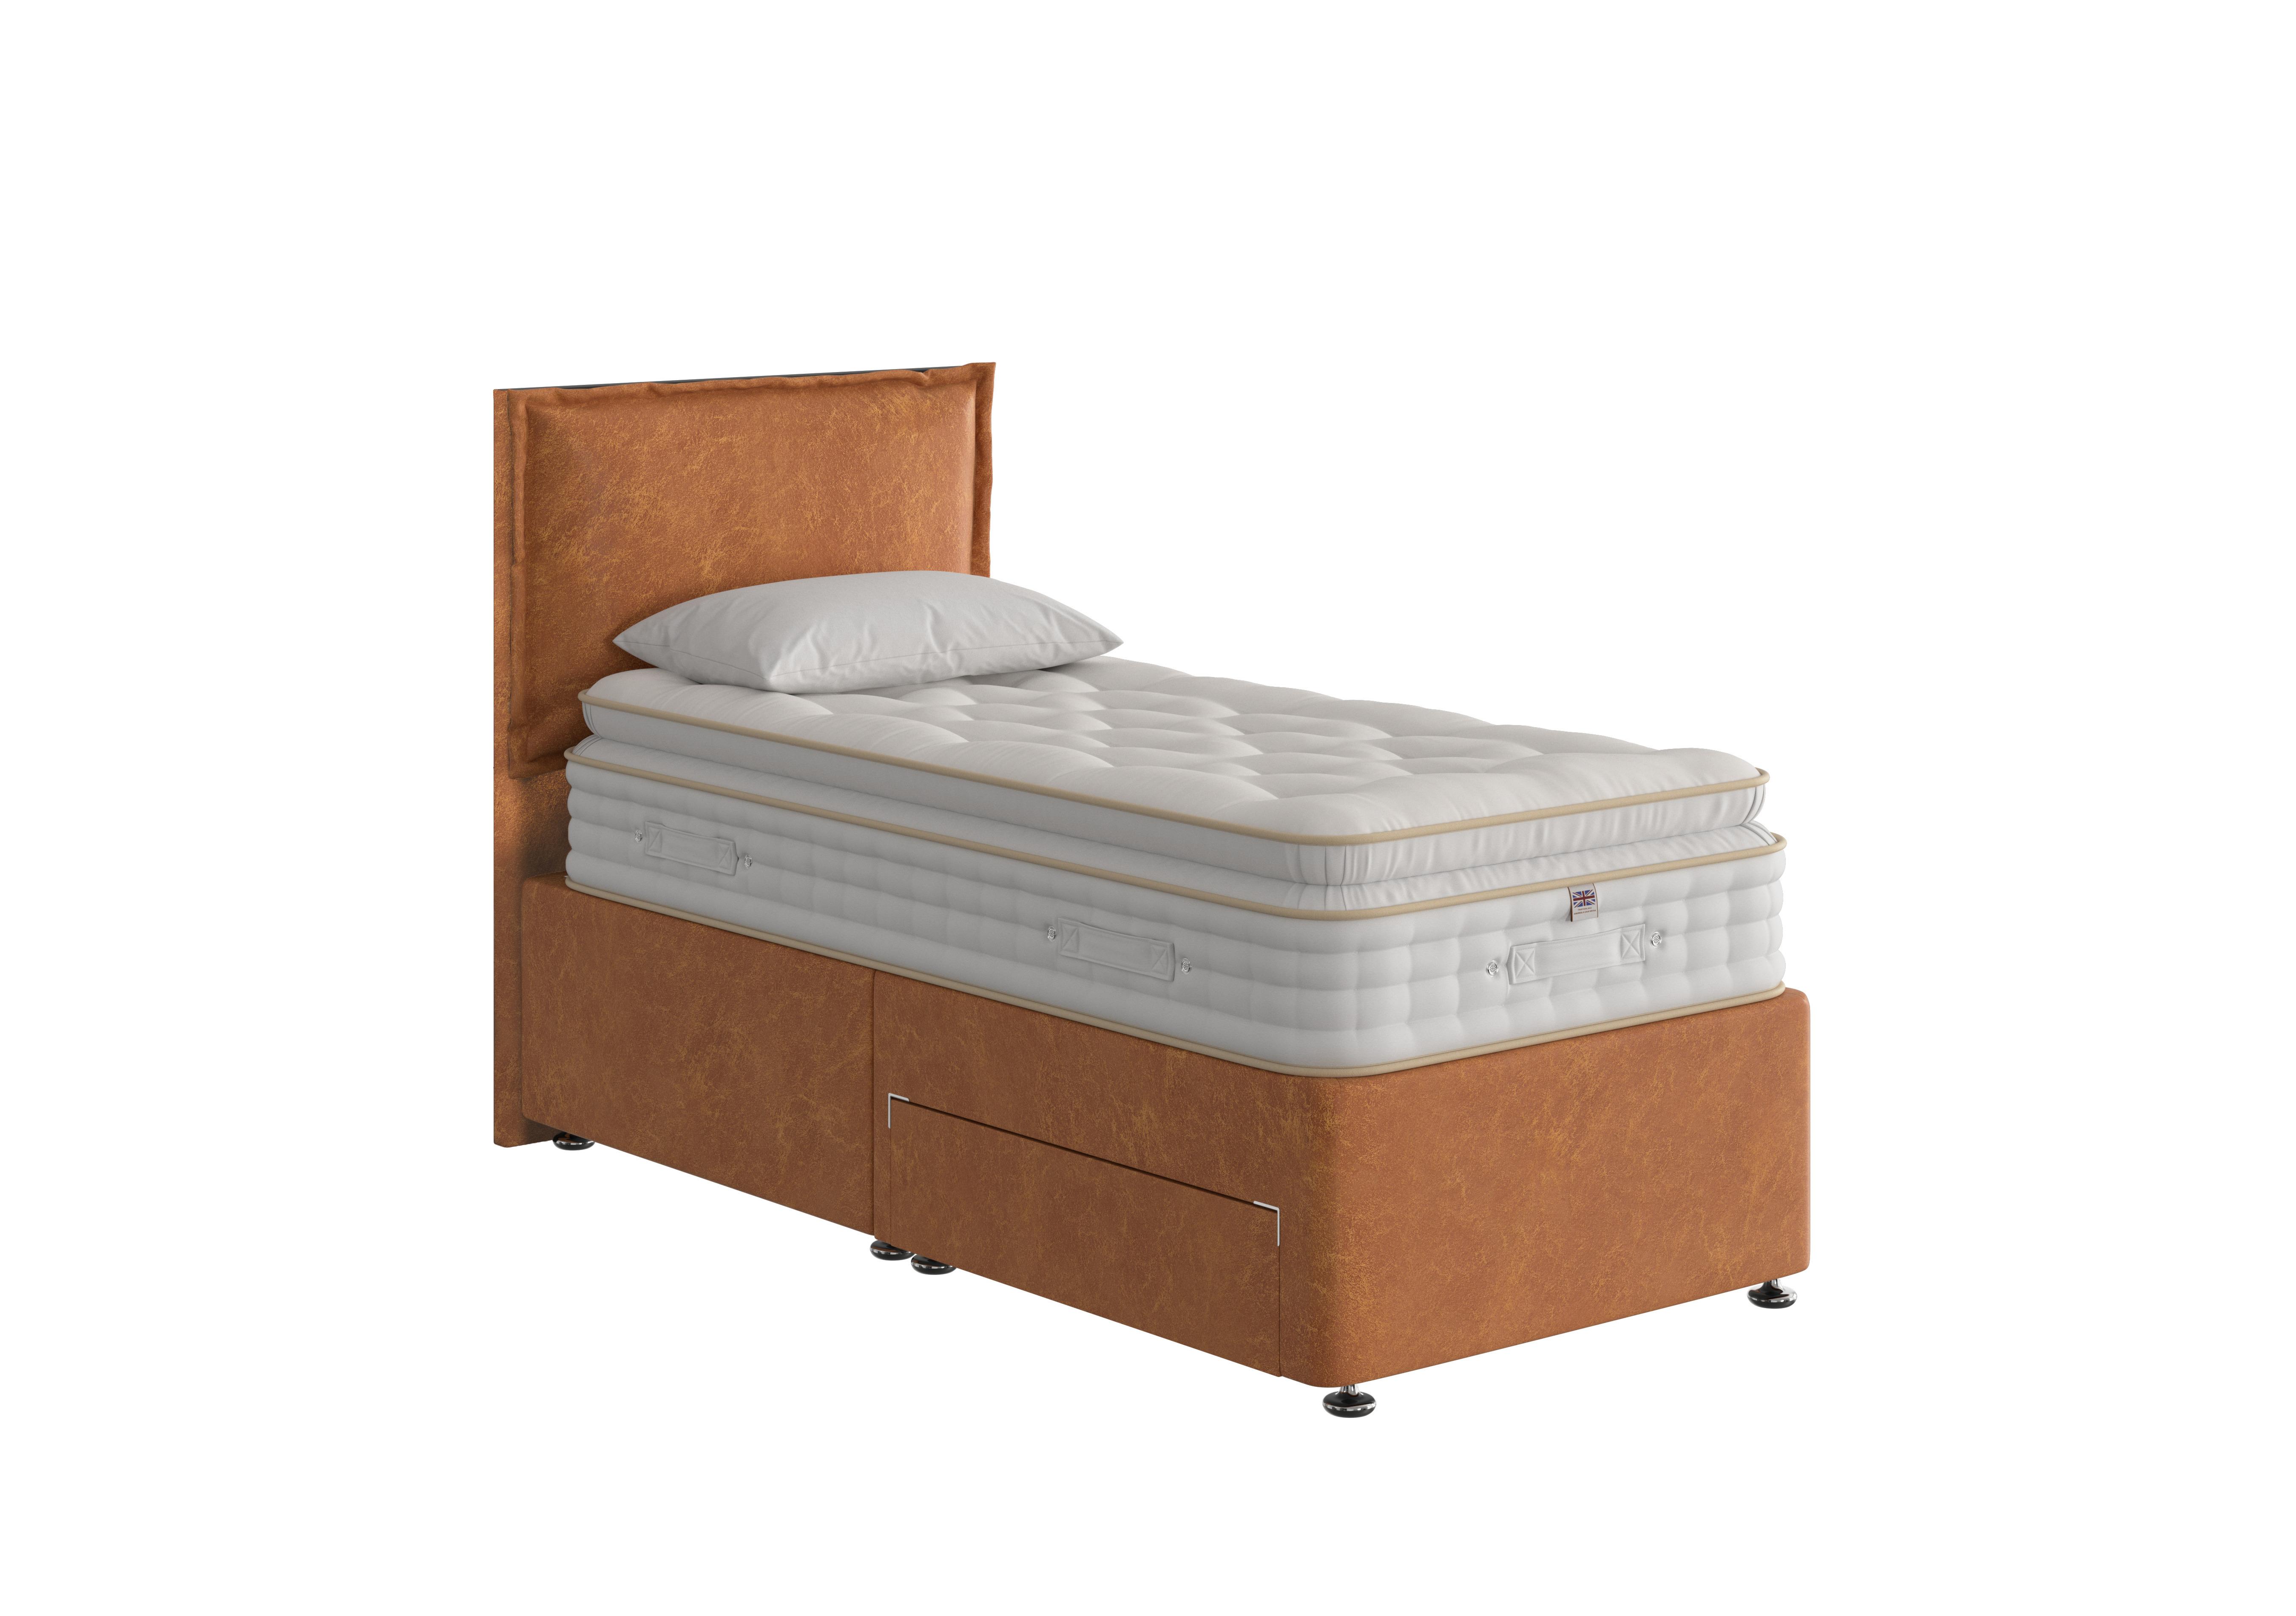 Boutique 3000 Pillow Top Divan Set in Rhodeo Rust on Furniture Village